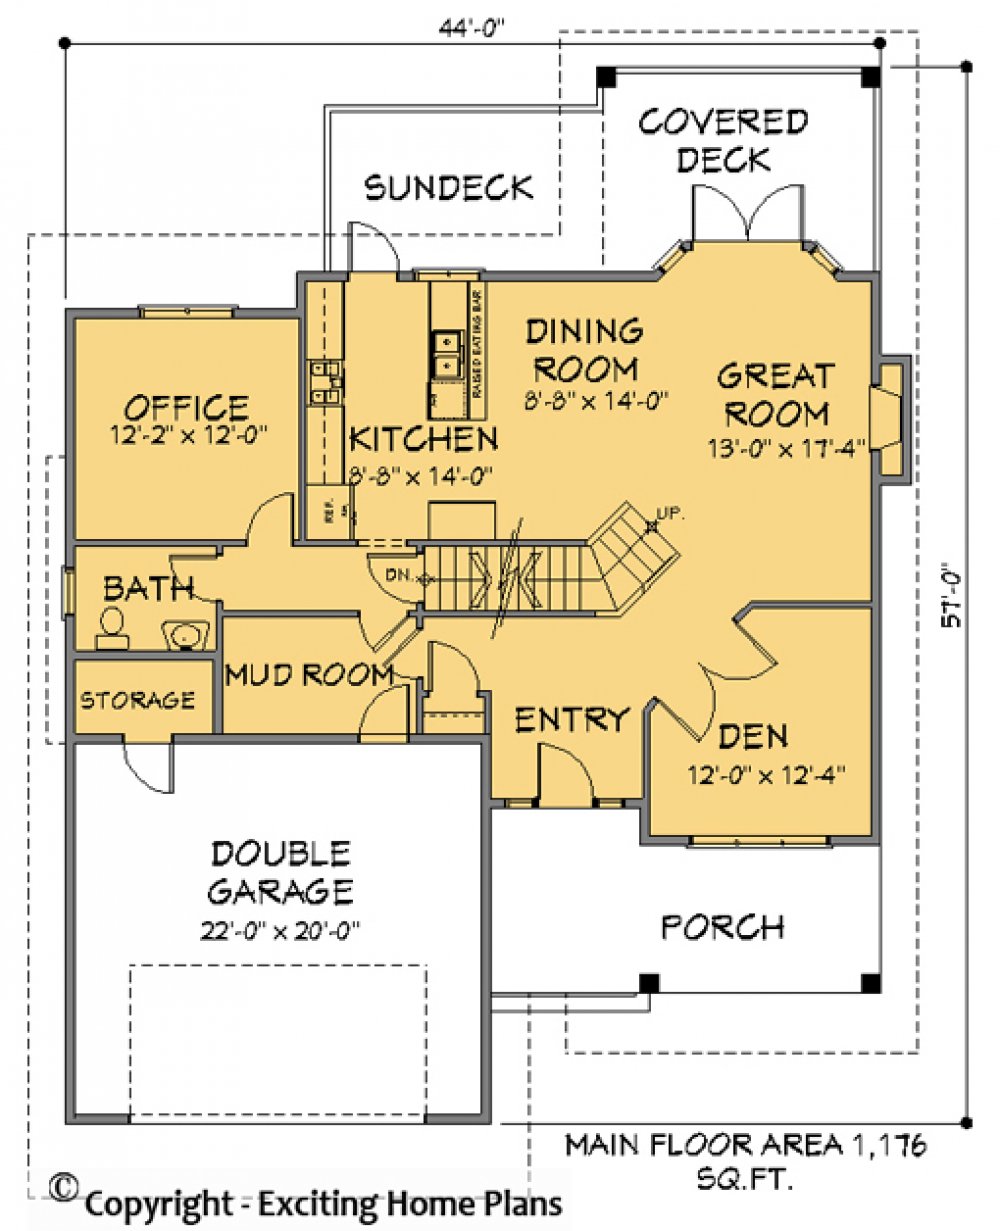 House Plan E1147-10 Main Floor Plan